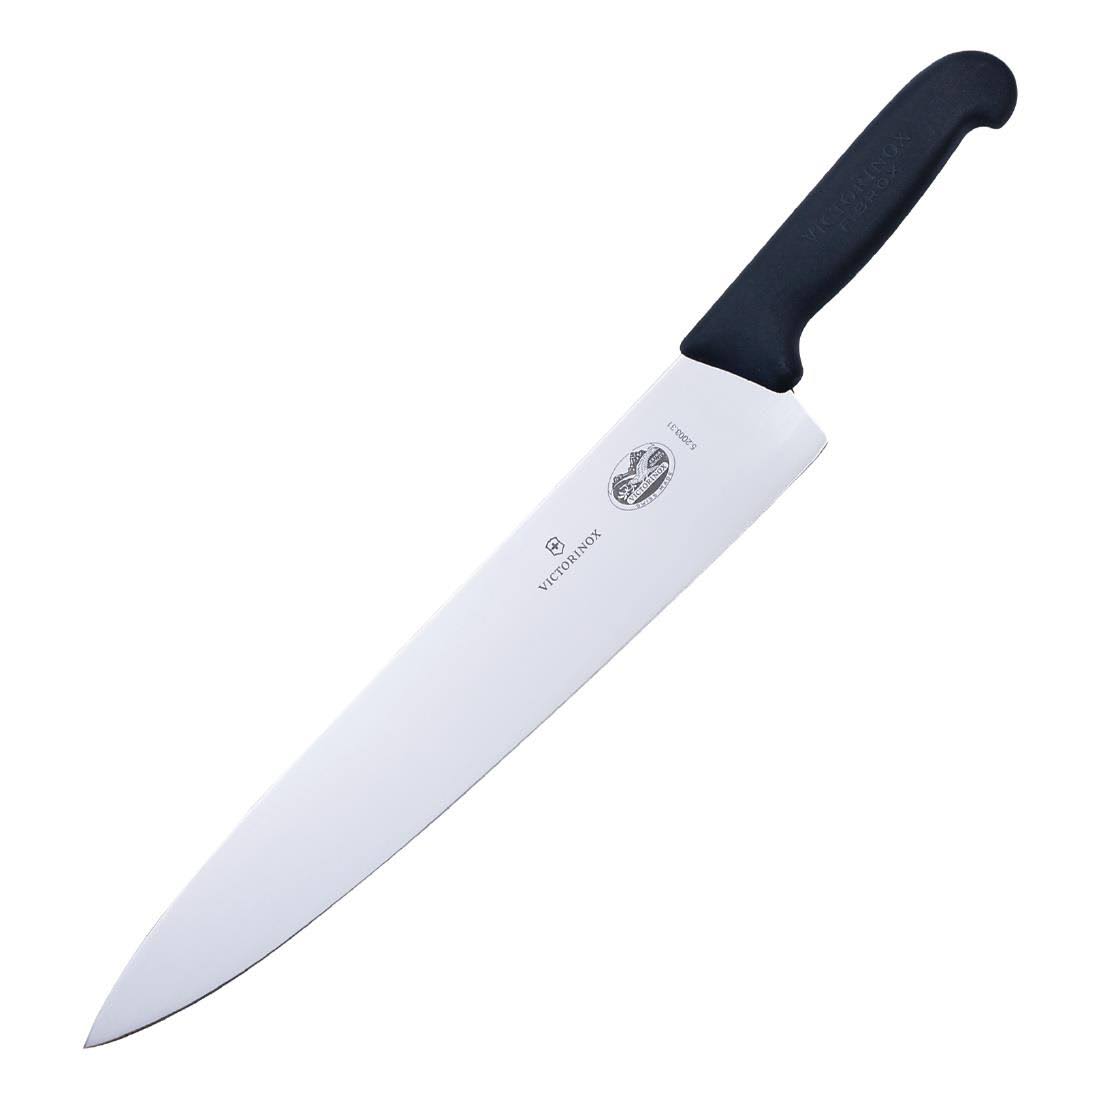 Victorinox Fibrox Carving Knife 30.5cm